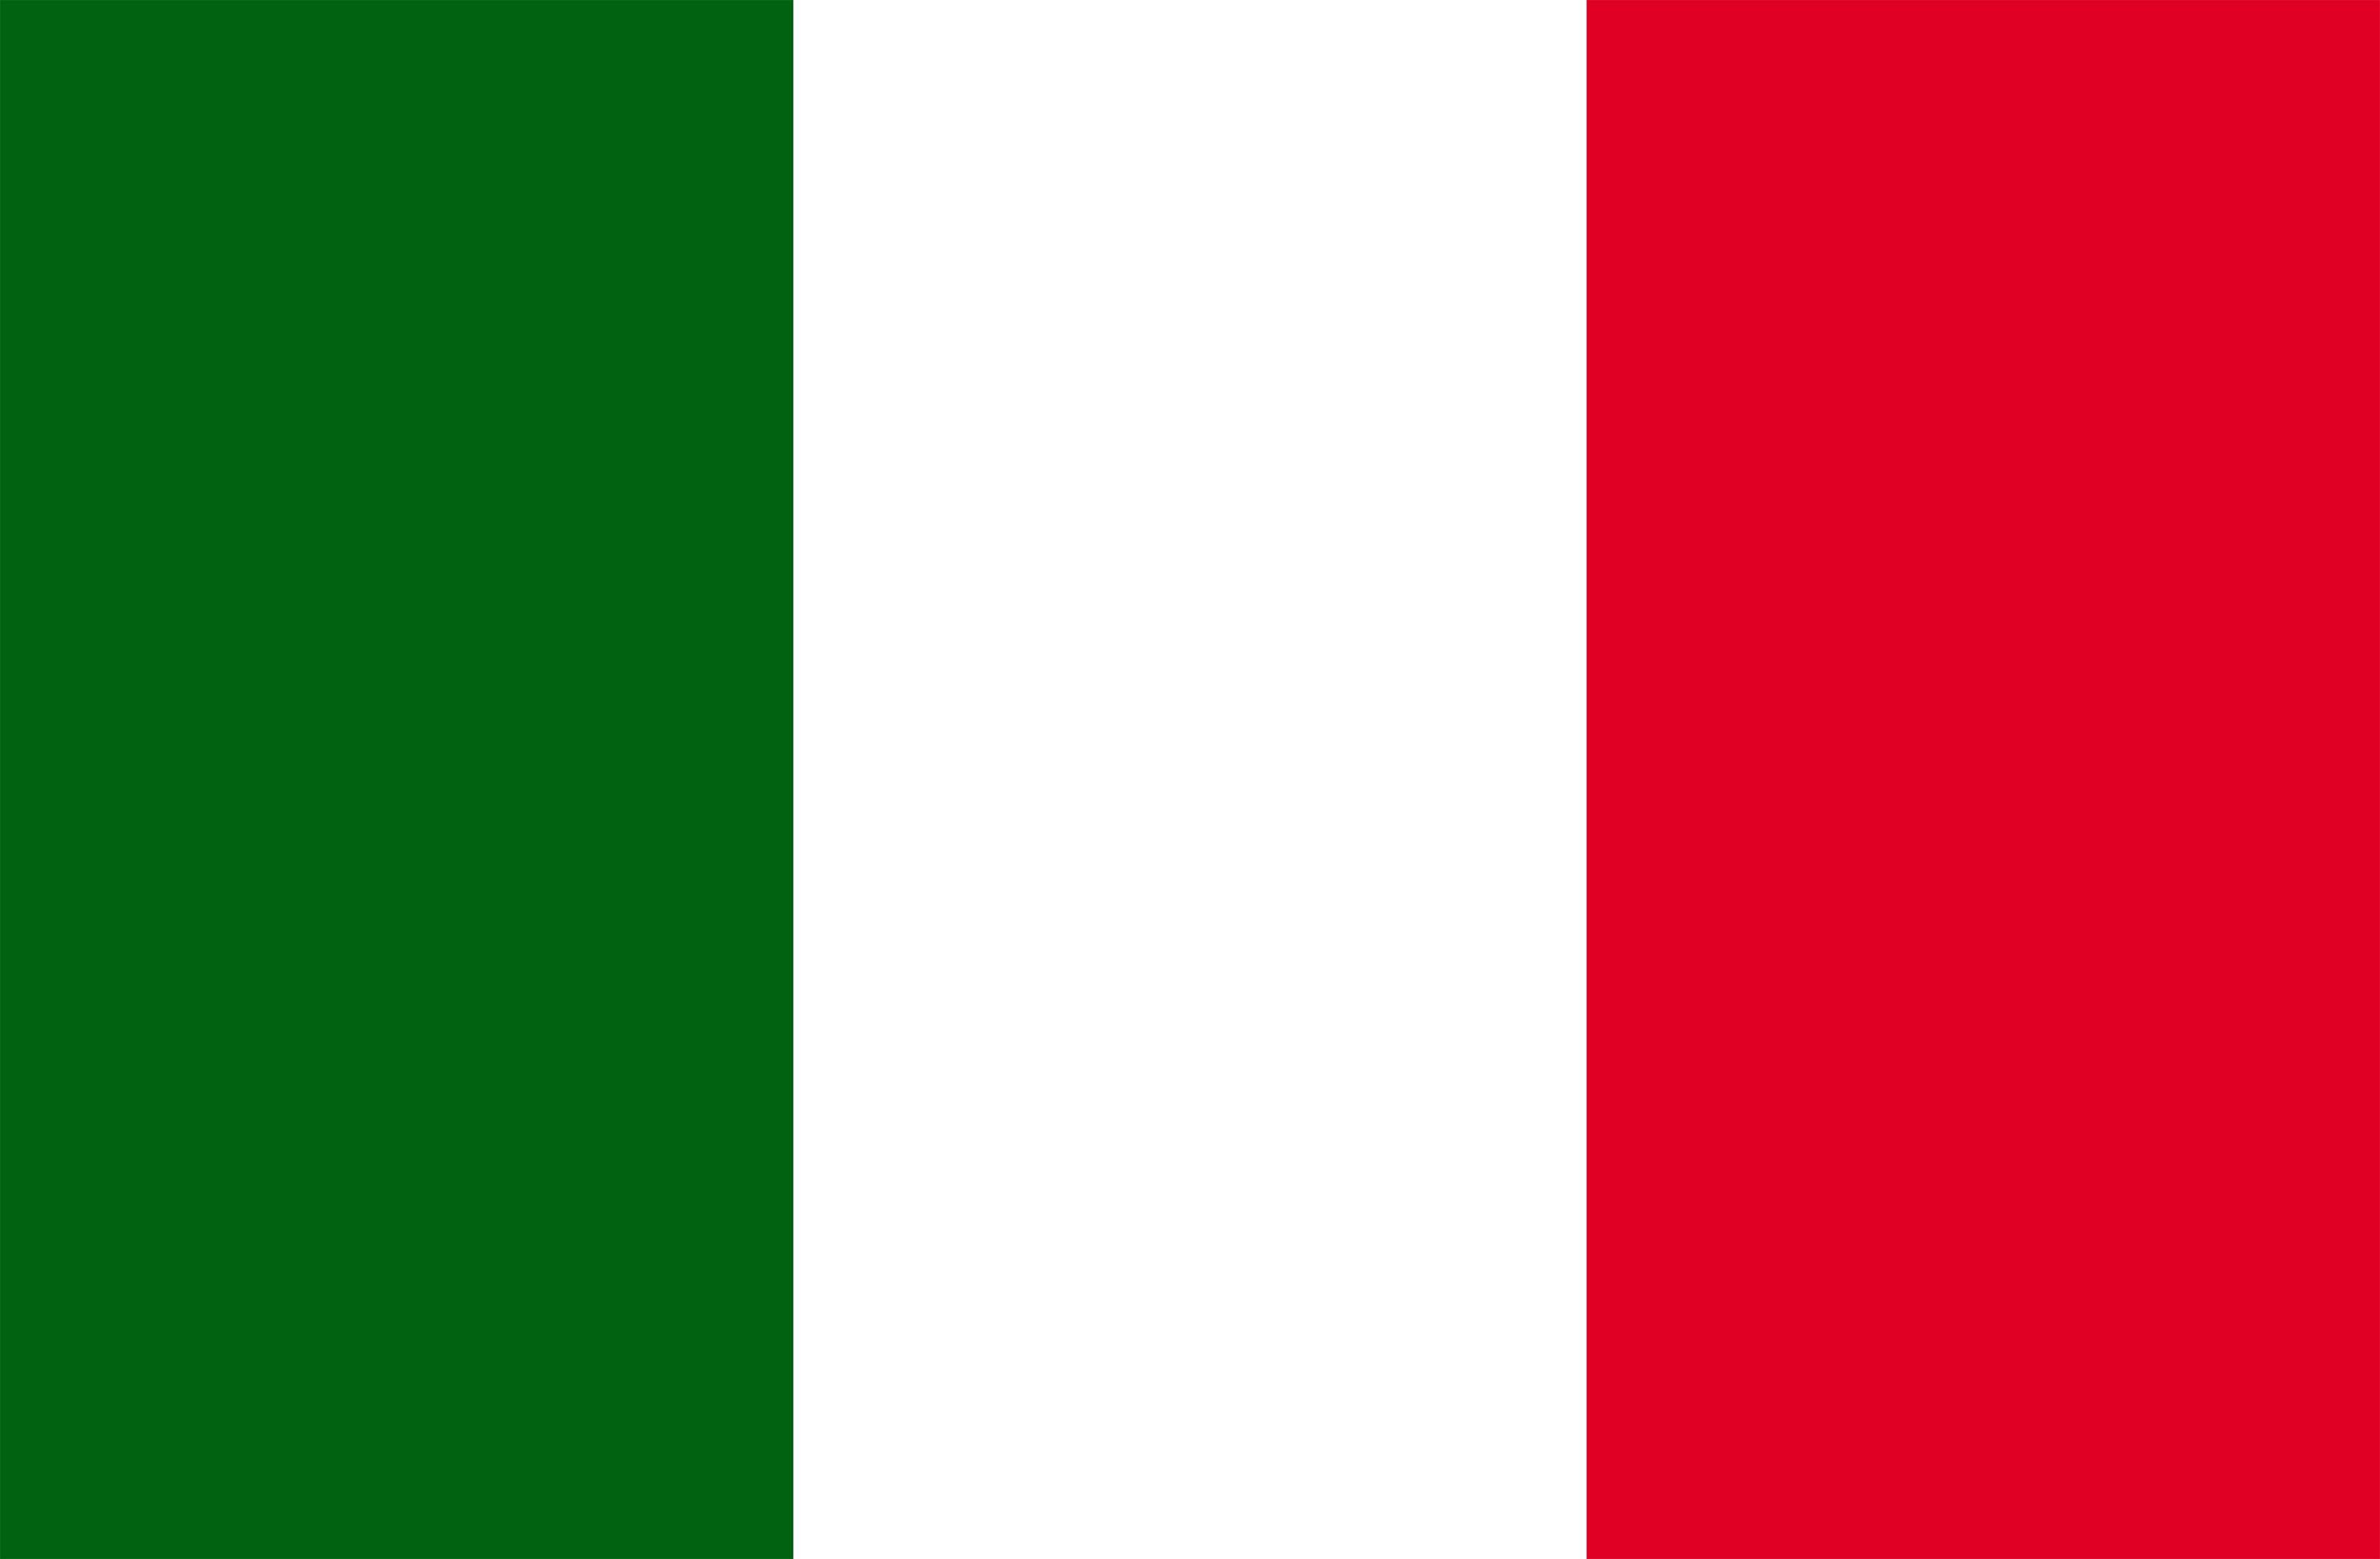 Flag of Italy - 5ft x 3ft Italian Fabric Flag